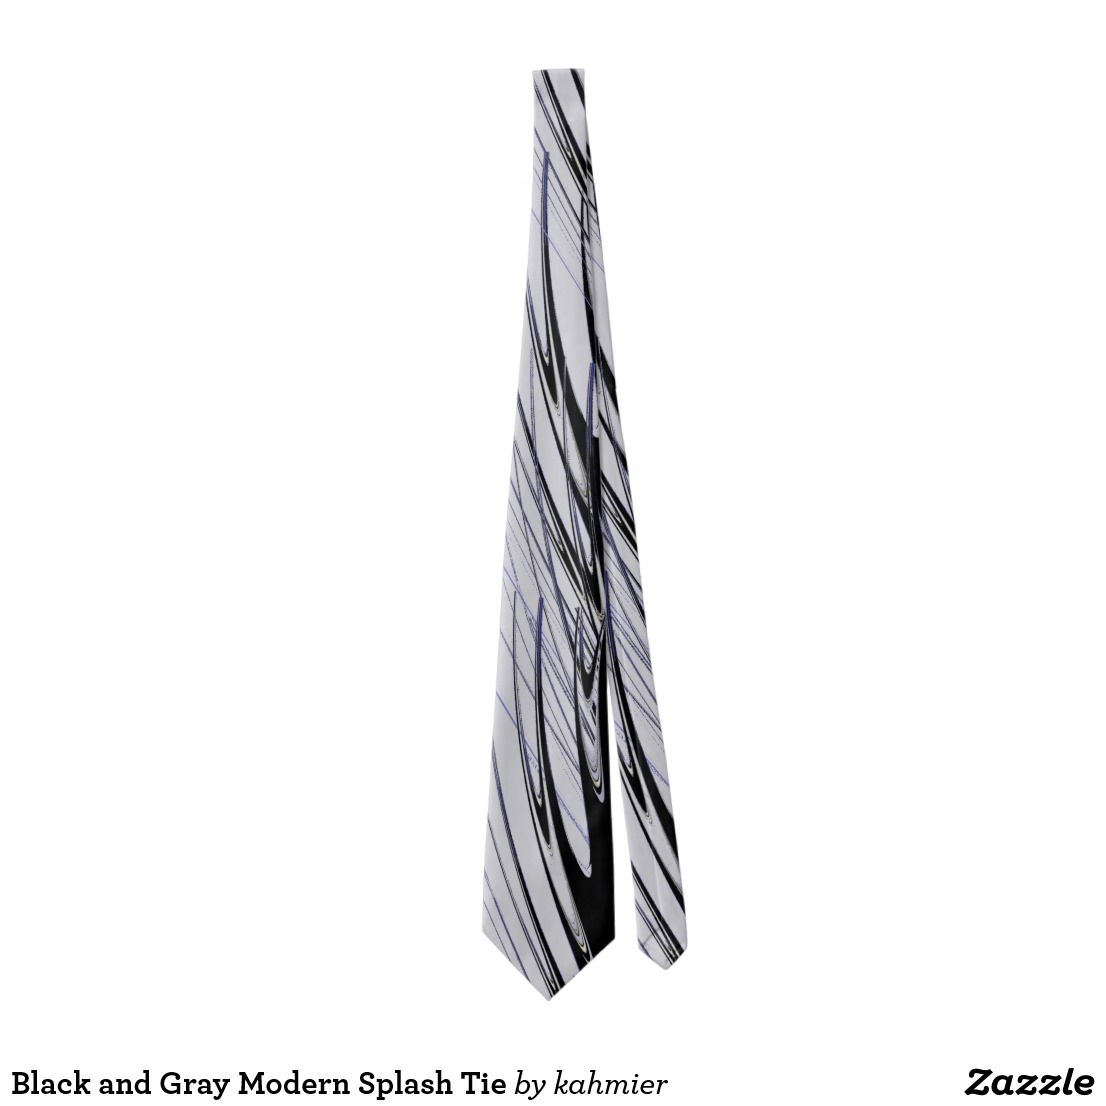 Black and Gray Modern Splash Tie